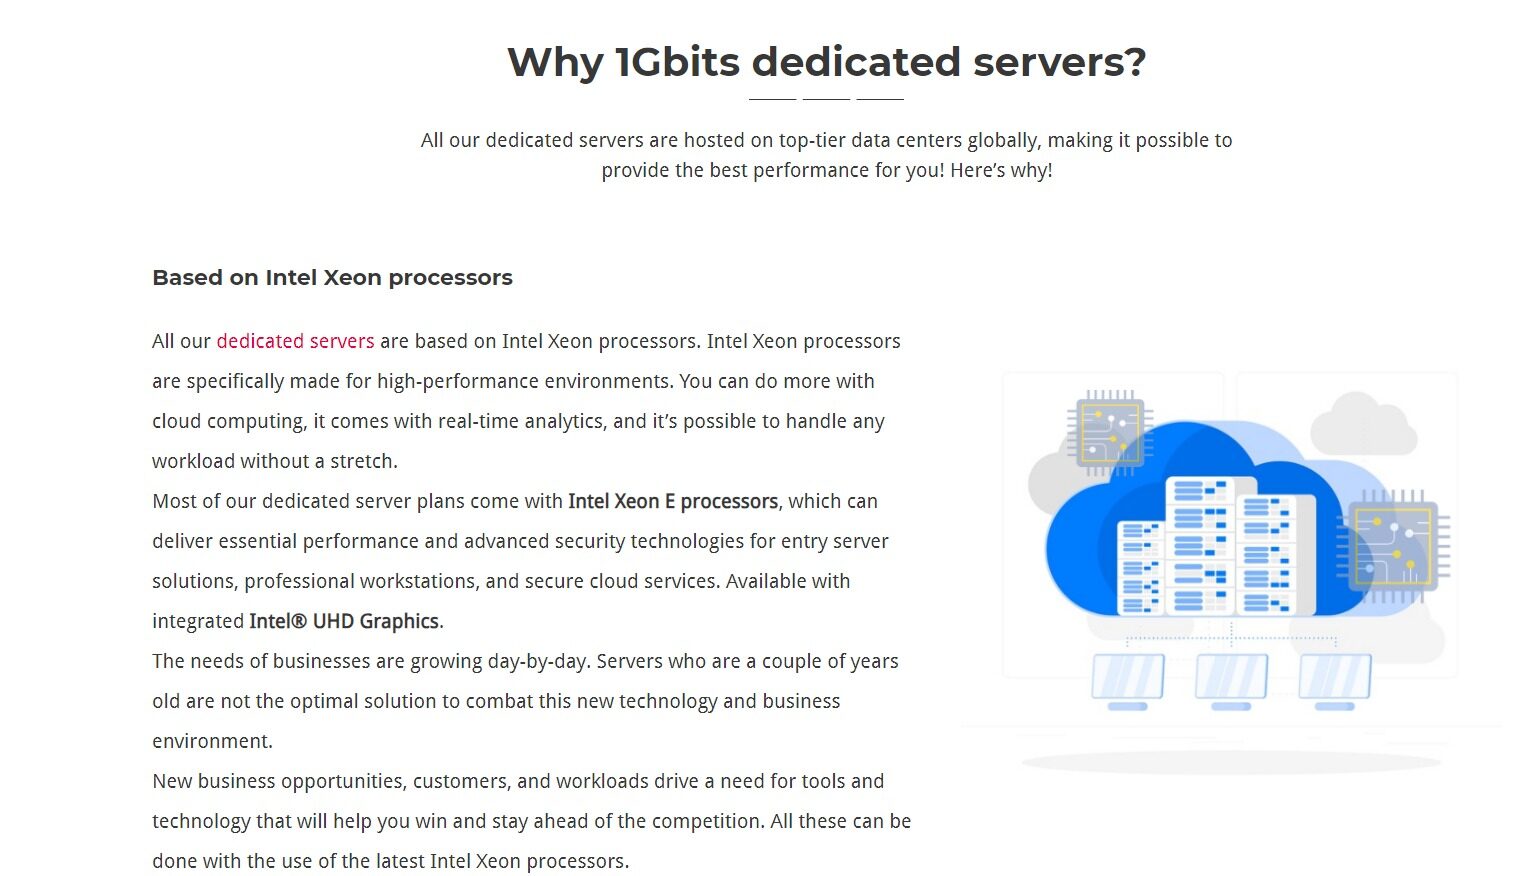 1Gbits servers